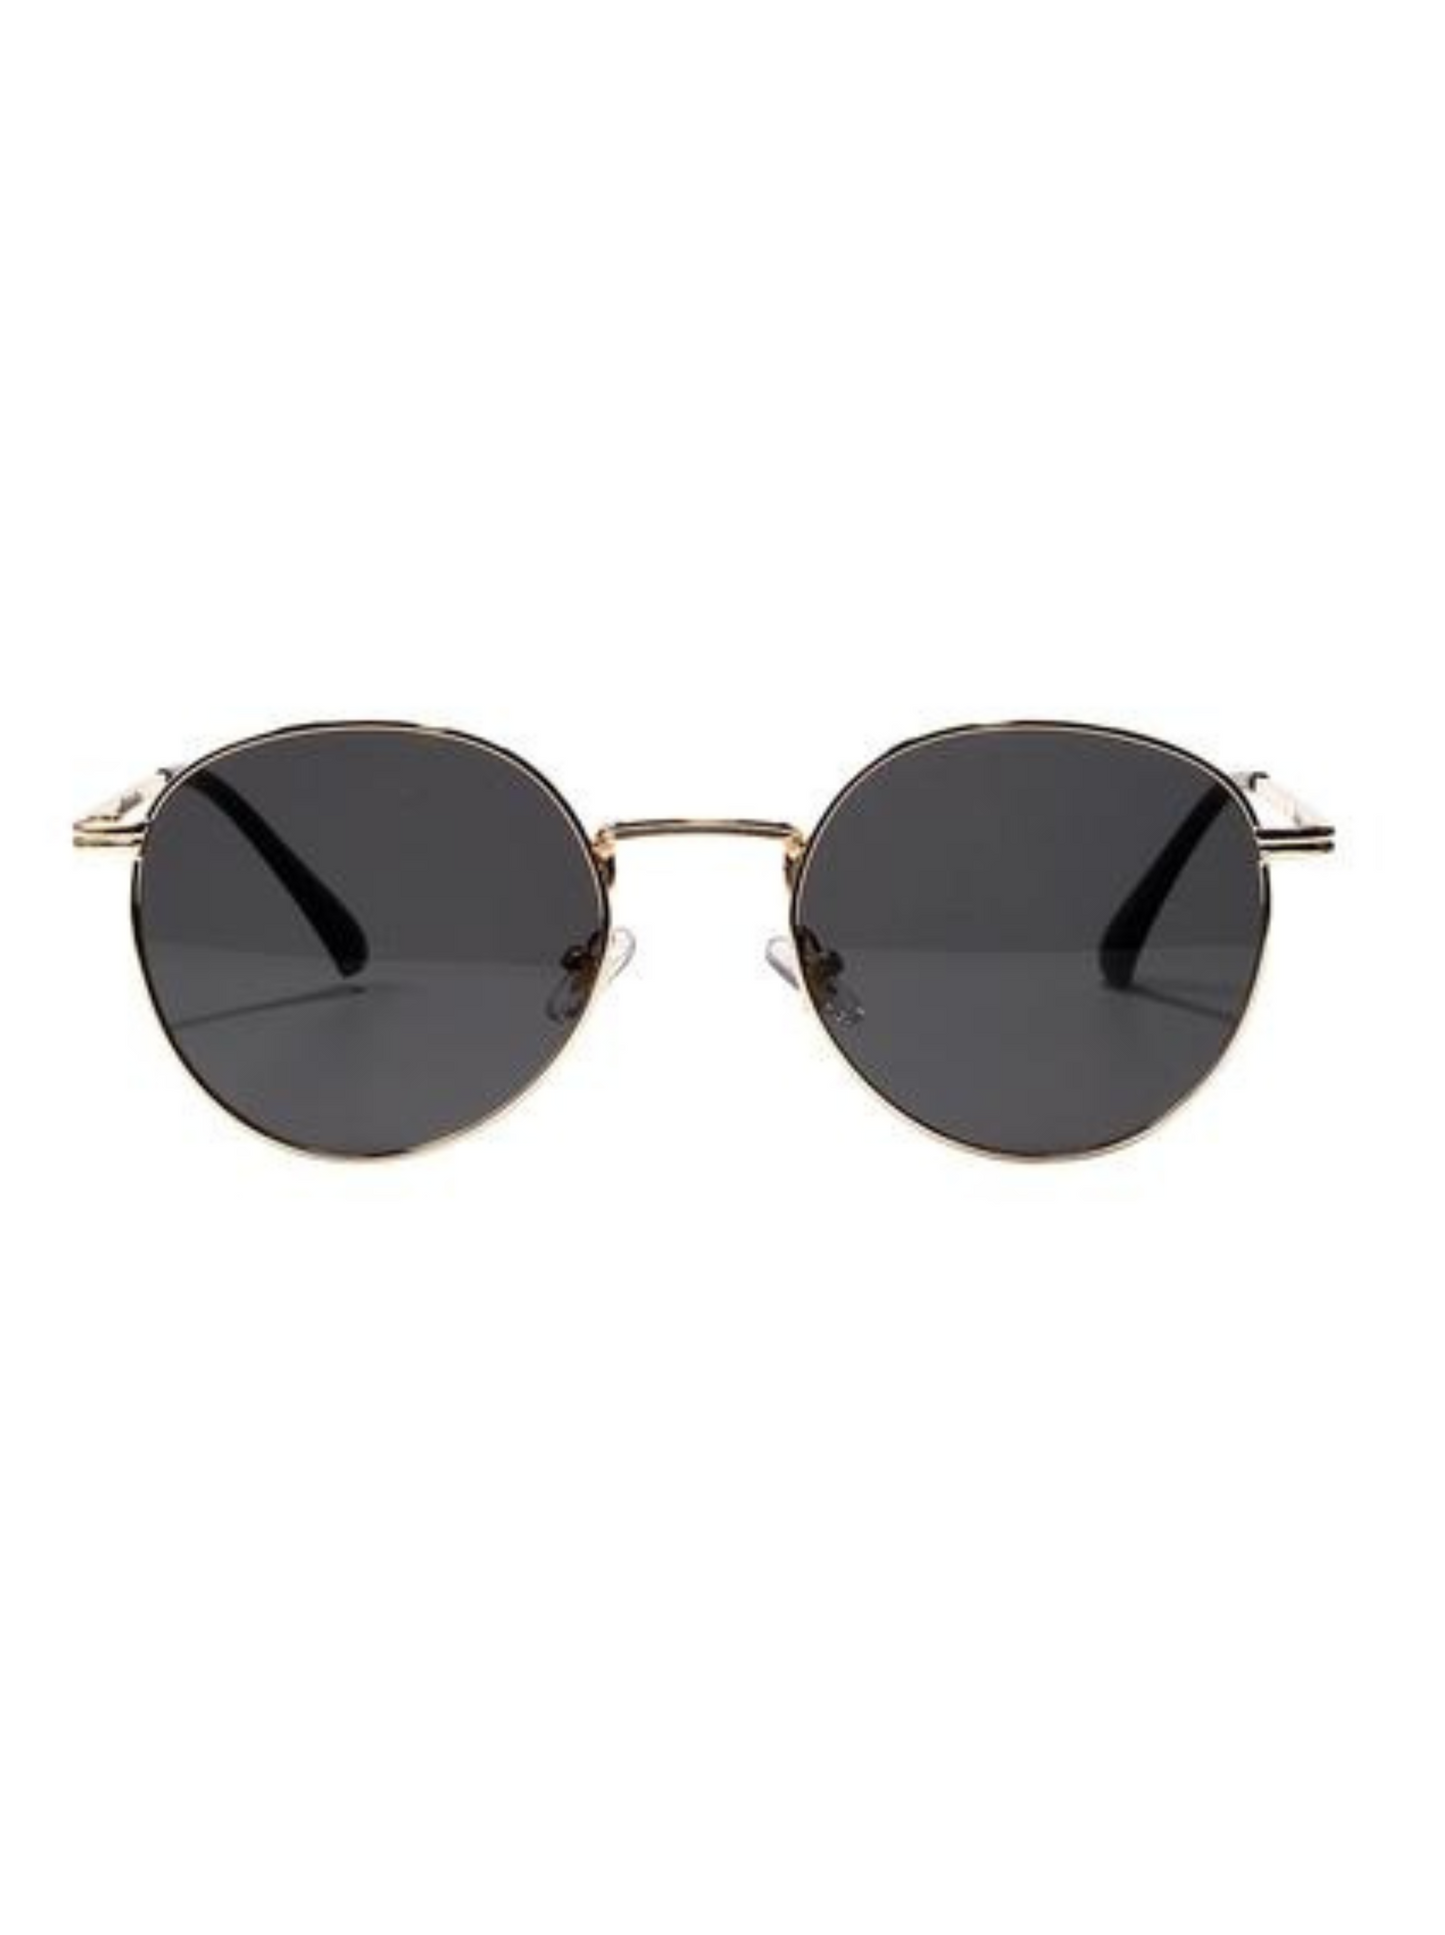 Jackson Sunglasses - Black/Gold